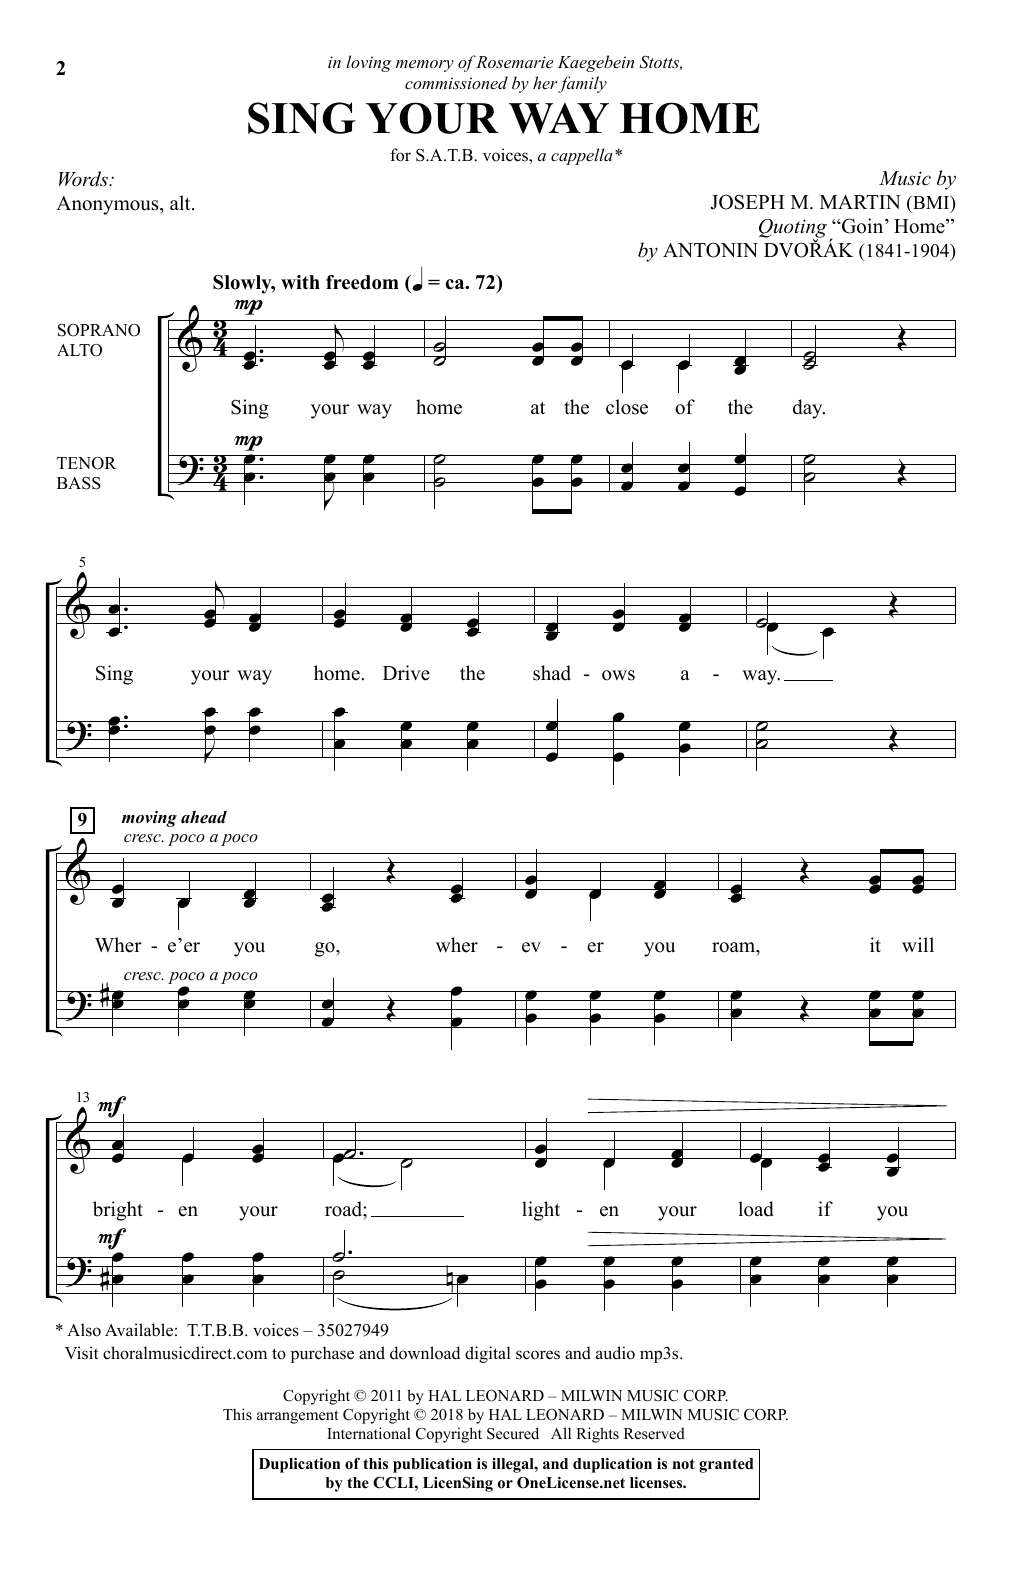 Joseph M. Martin Sing Your Way Home Sheet Music Notes & Chords for TTBB Choir - Download or Print PDF